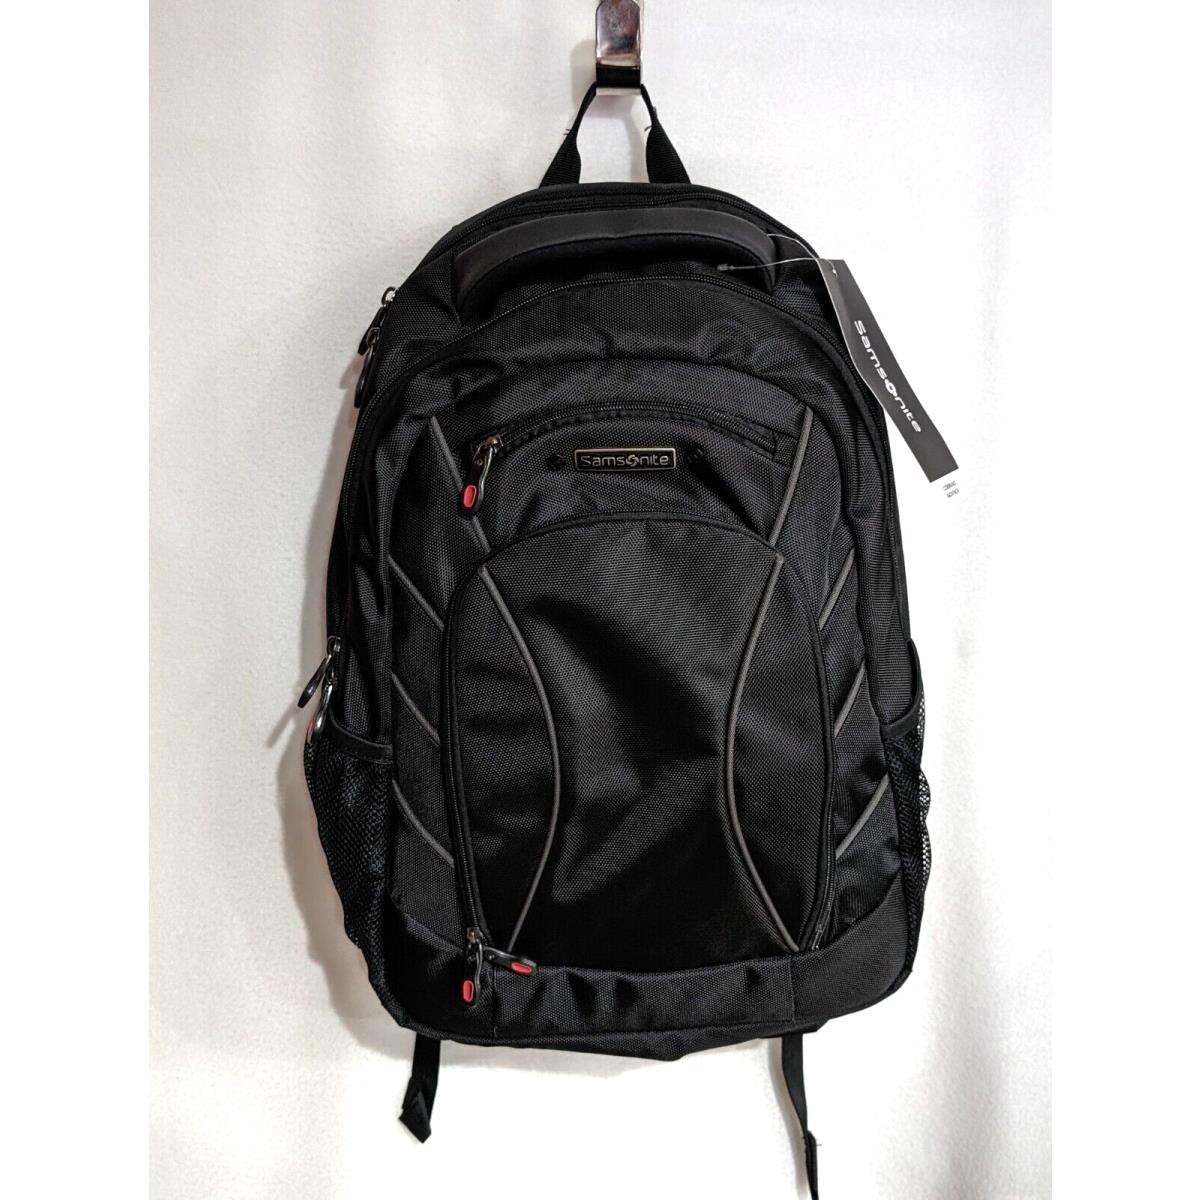 Samsonite Revell Executive Command Black Backpack 77628-1041